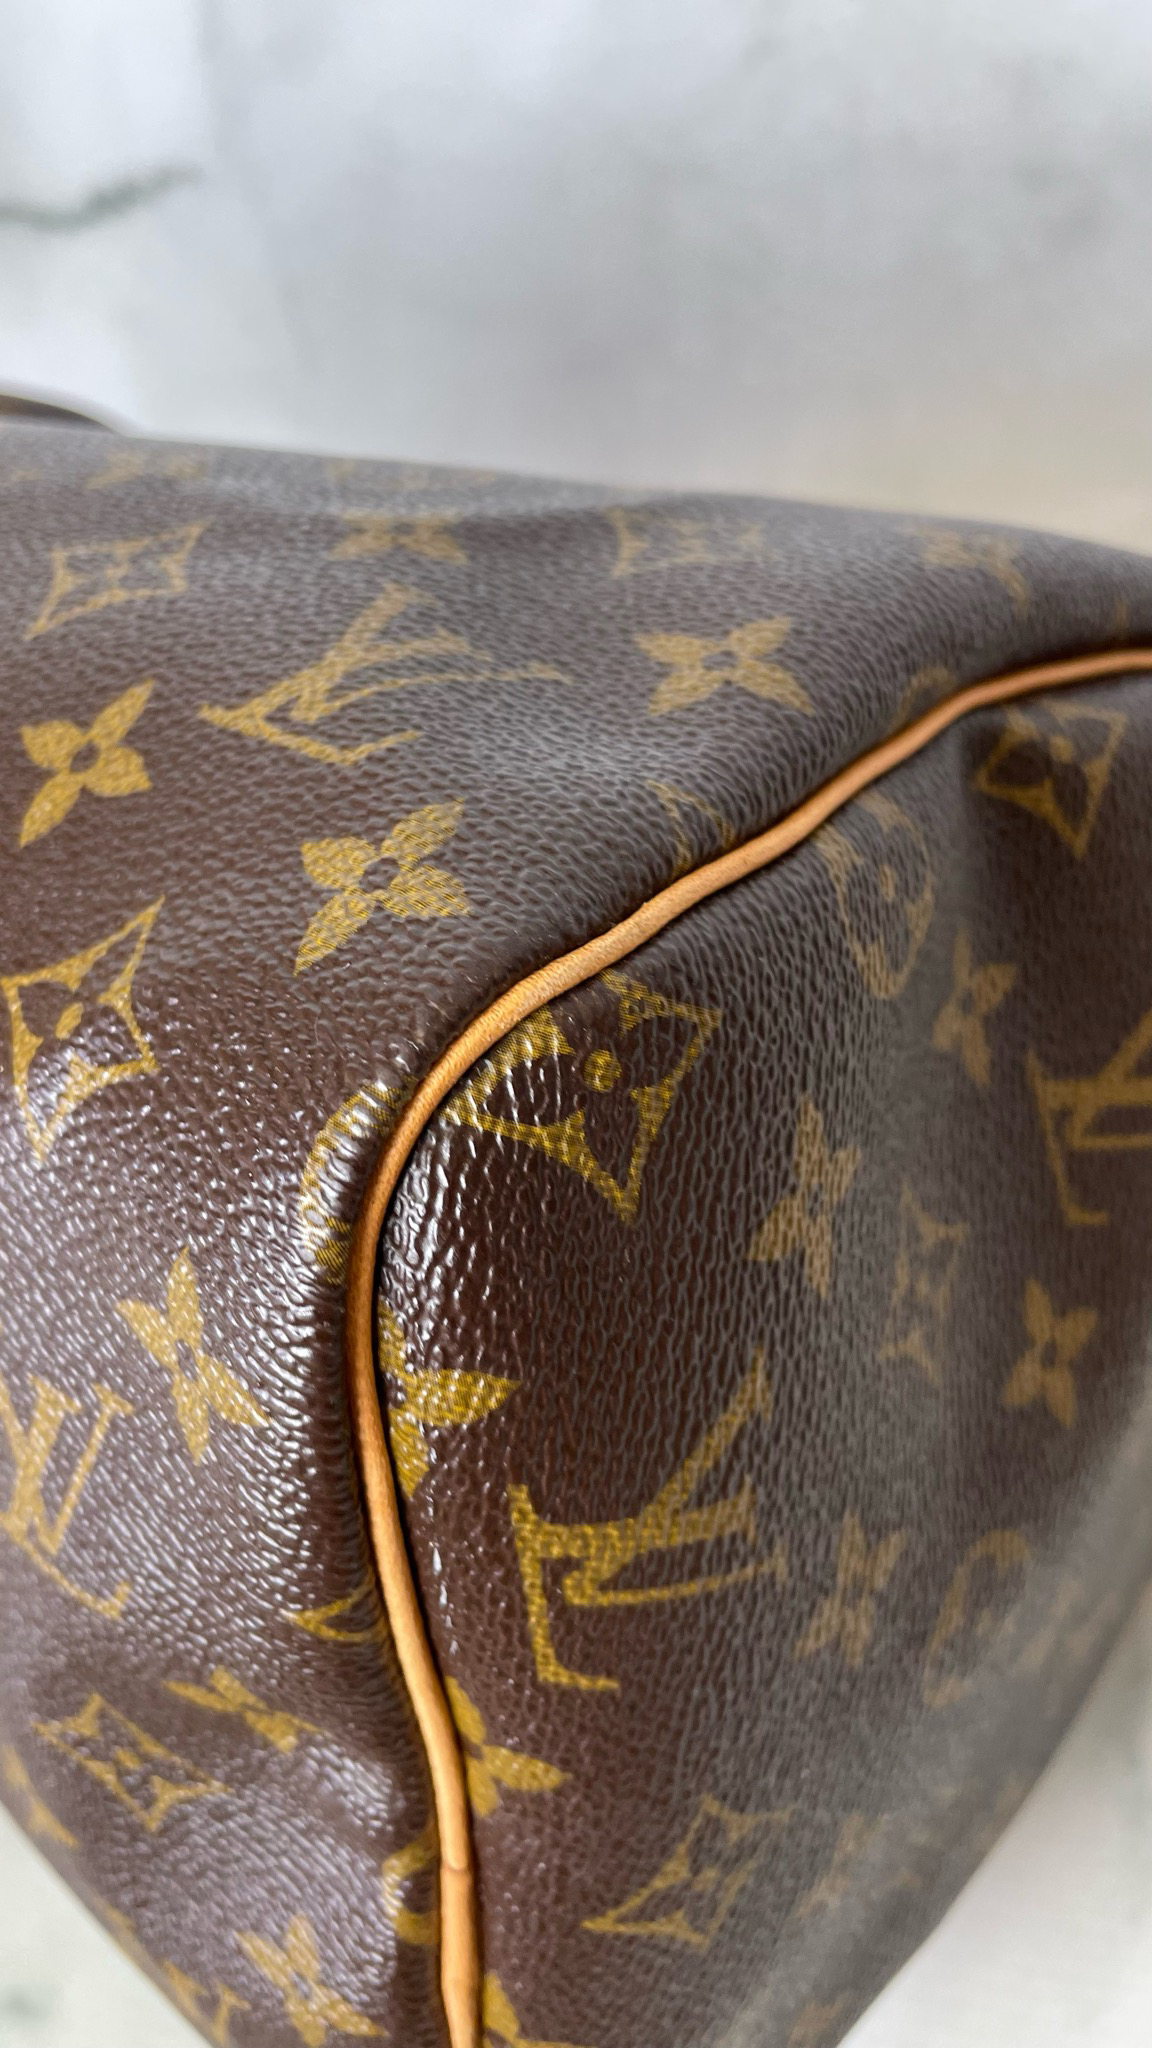 Louis Vuitton Speedy 25 Puffer Bag, Monogram Top Handle, New in Dustbag  WA001 - Julia Rose Boston